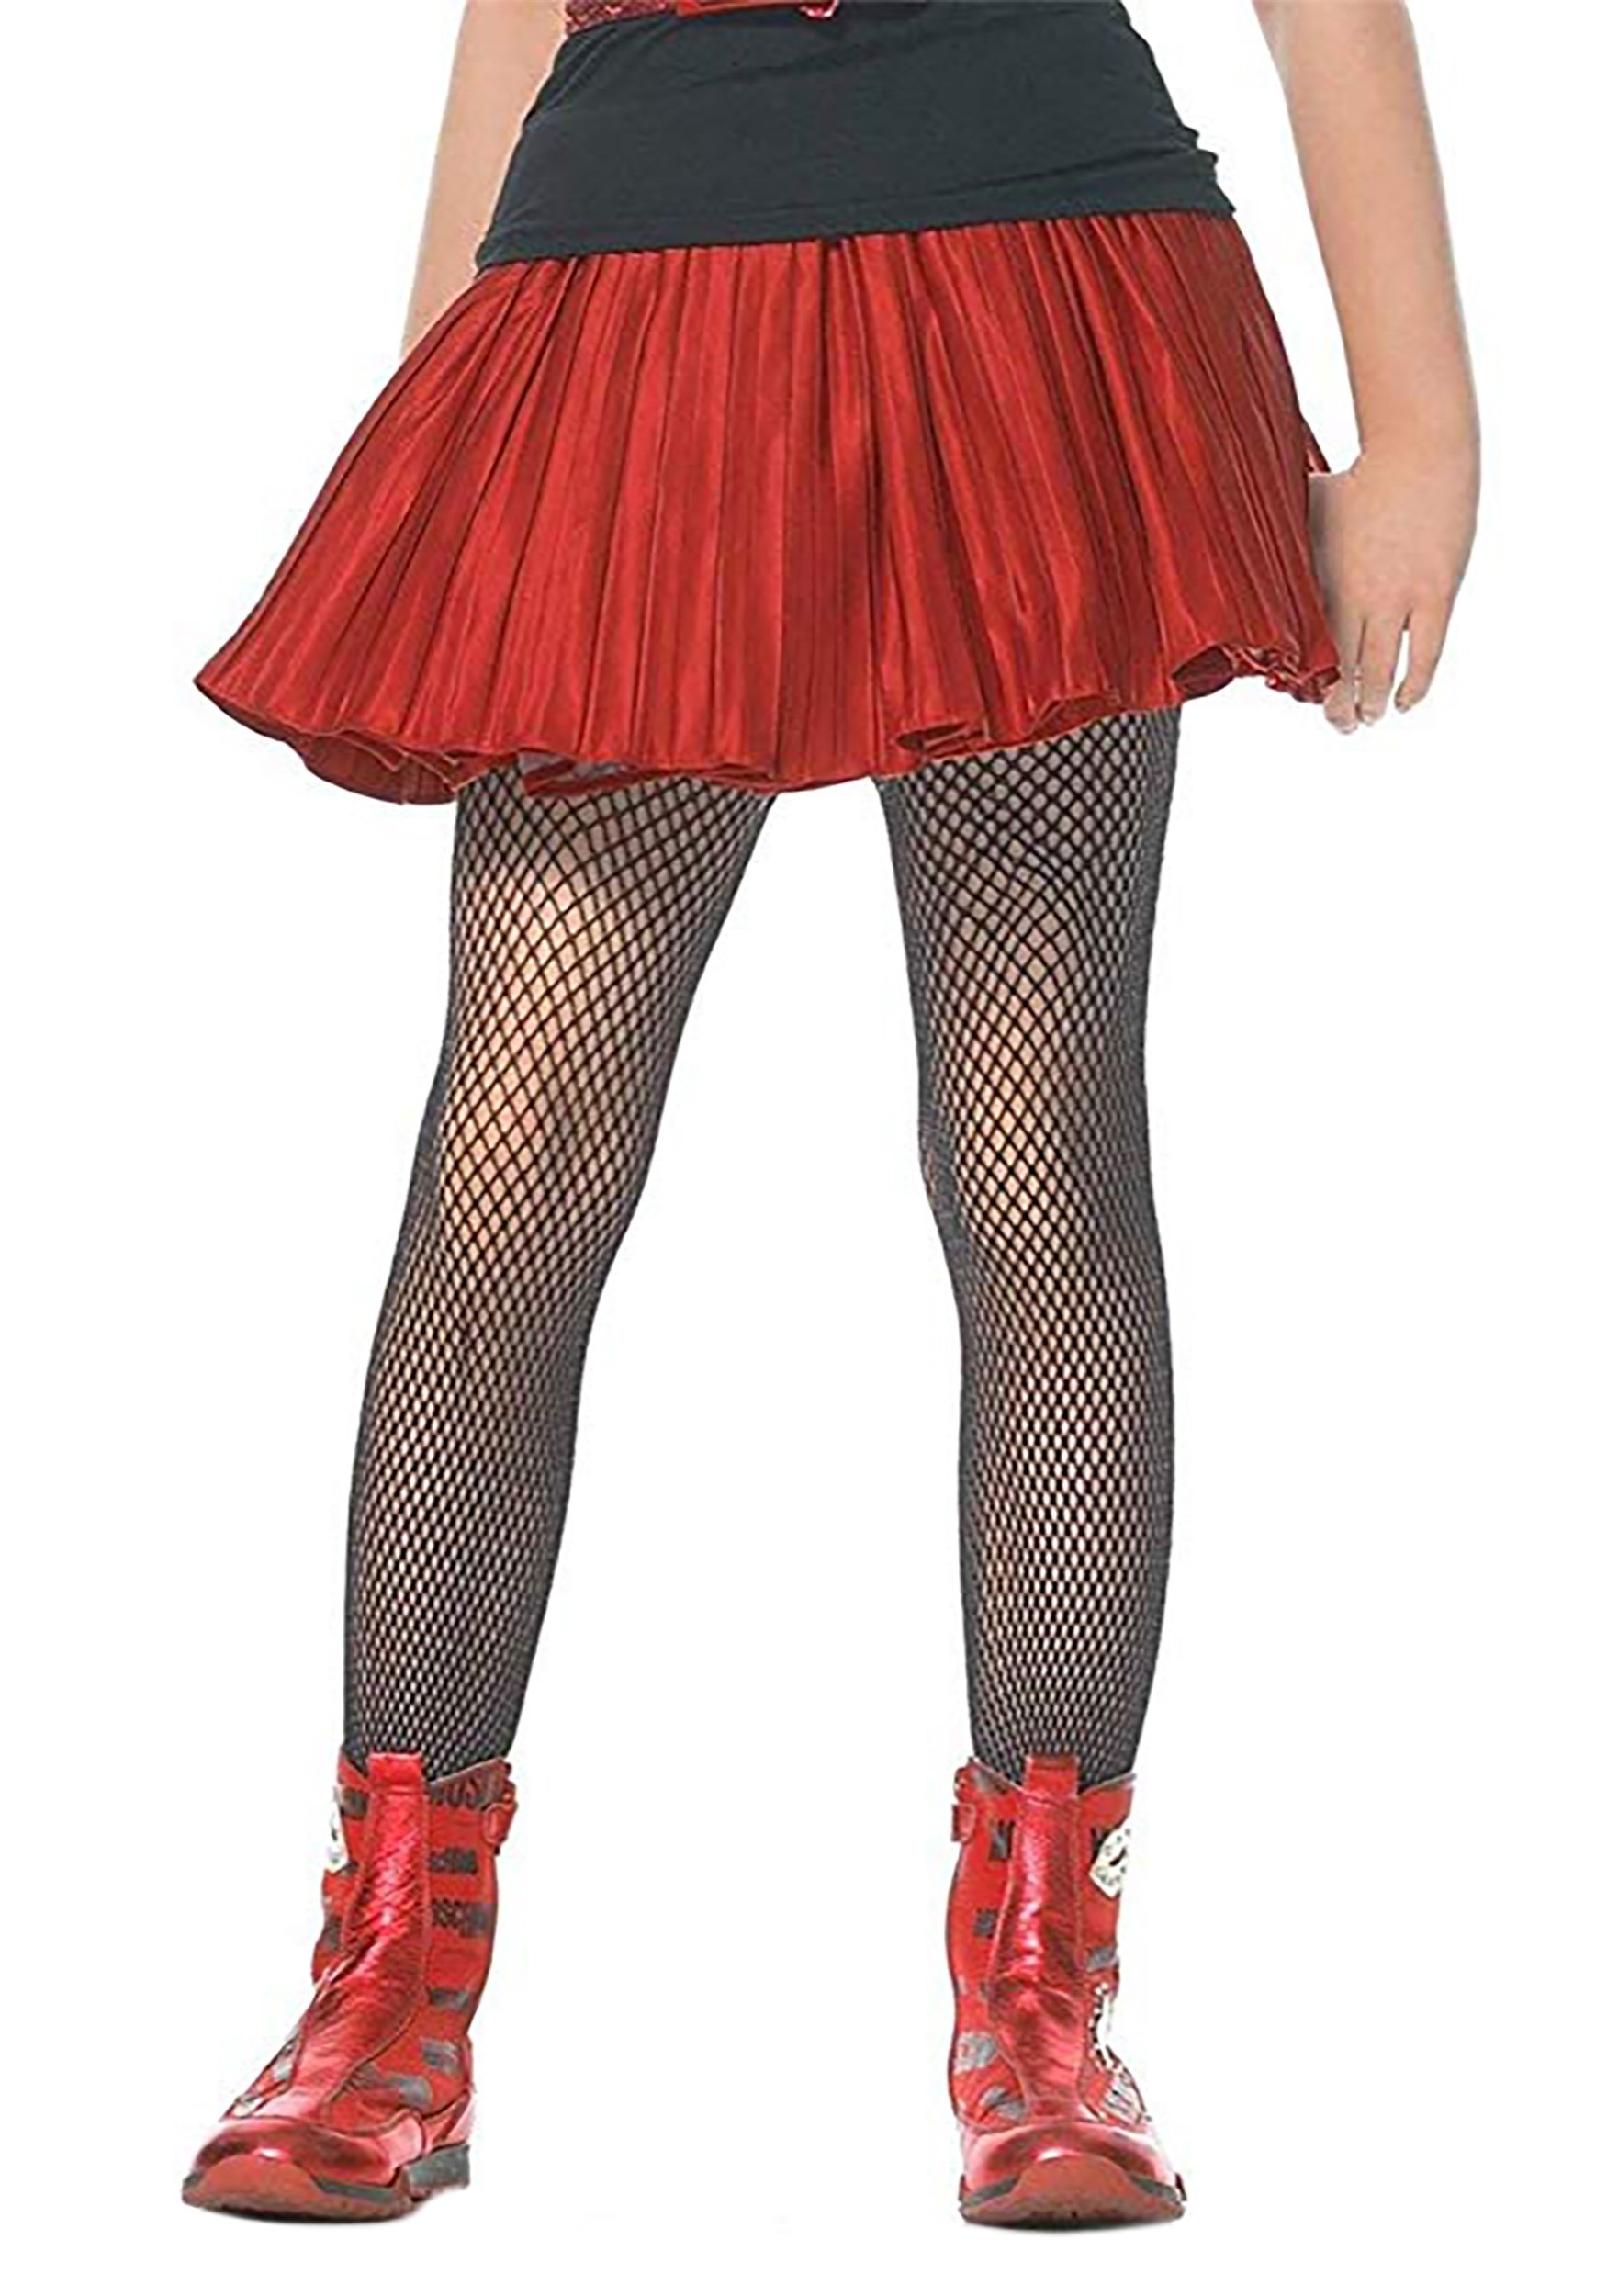 https://images.halloweencostumes.ca/products/6555/1-1/kids-black-fishnet-stockings.jpg